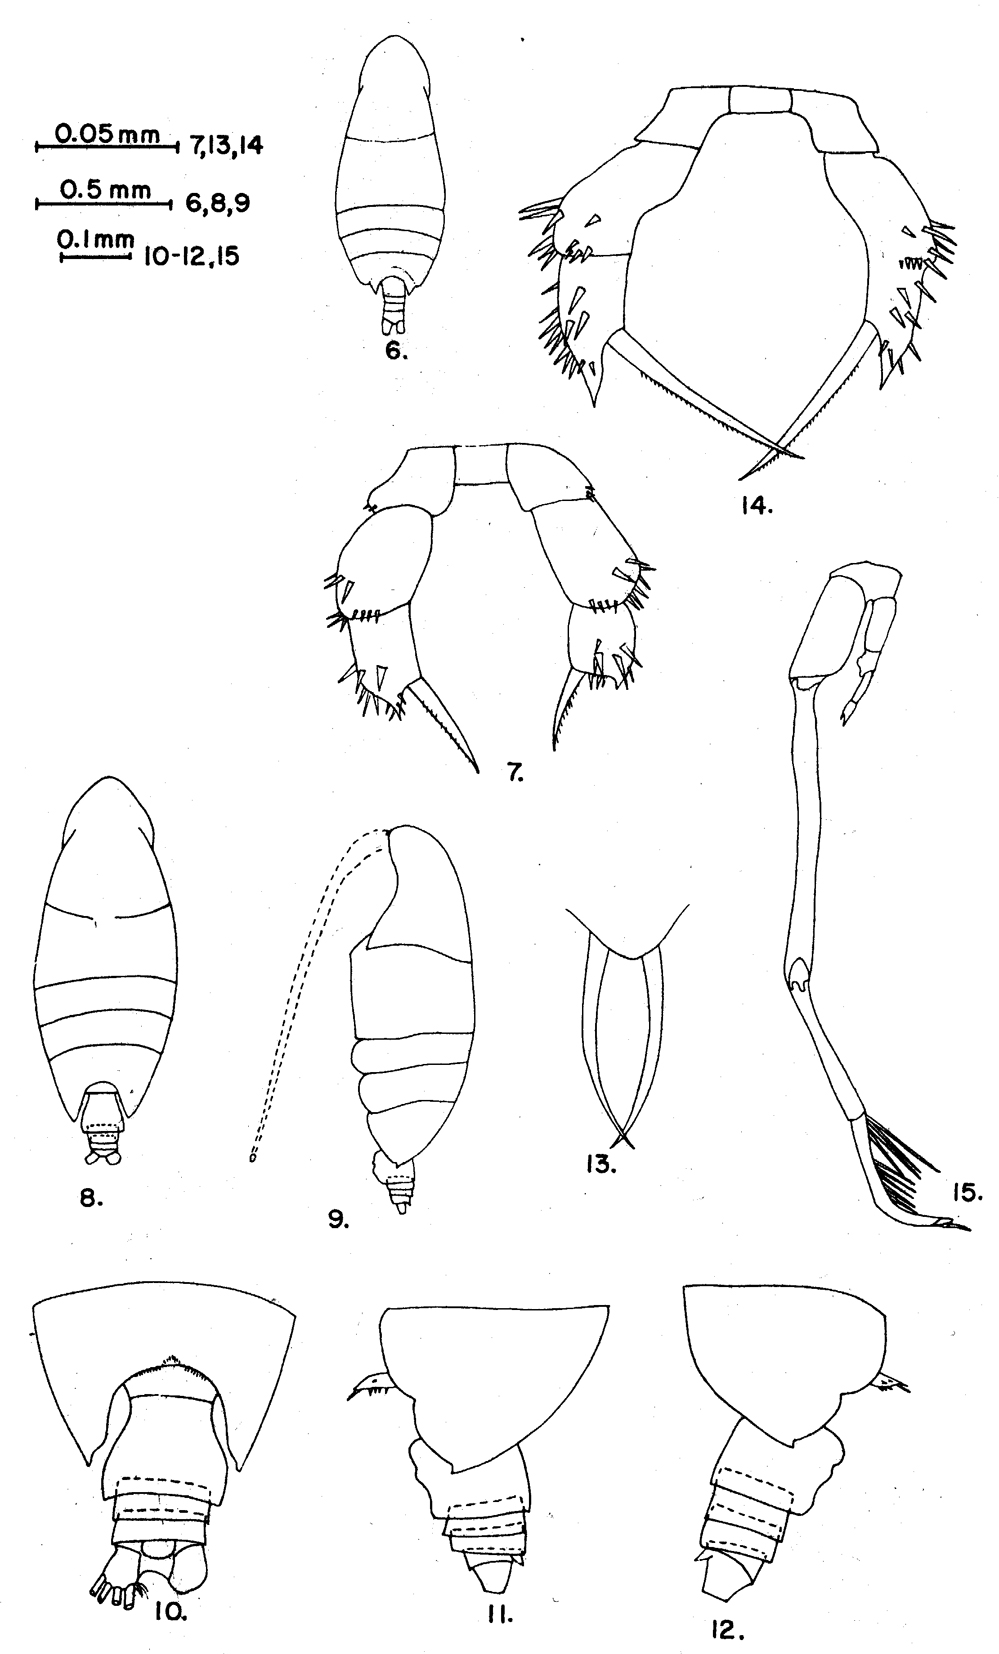 Species Scolecitrichopsis ctenopus - Plate 7 of morphological figures